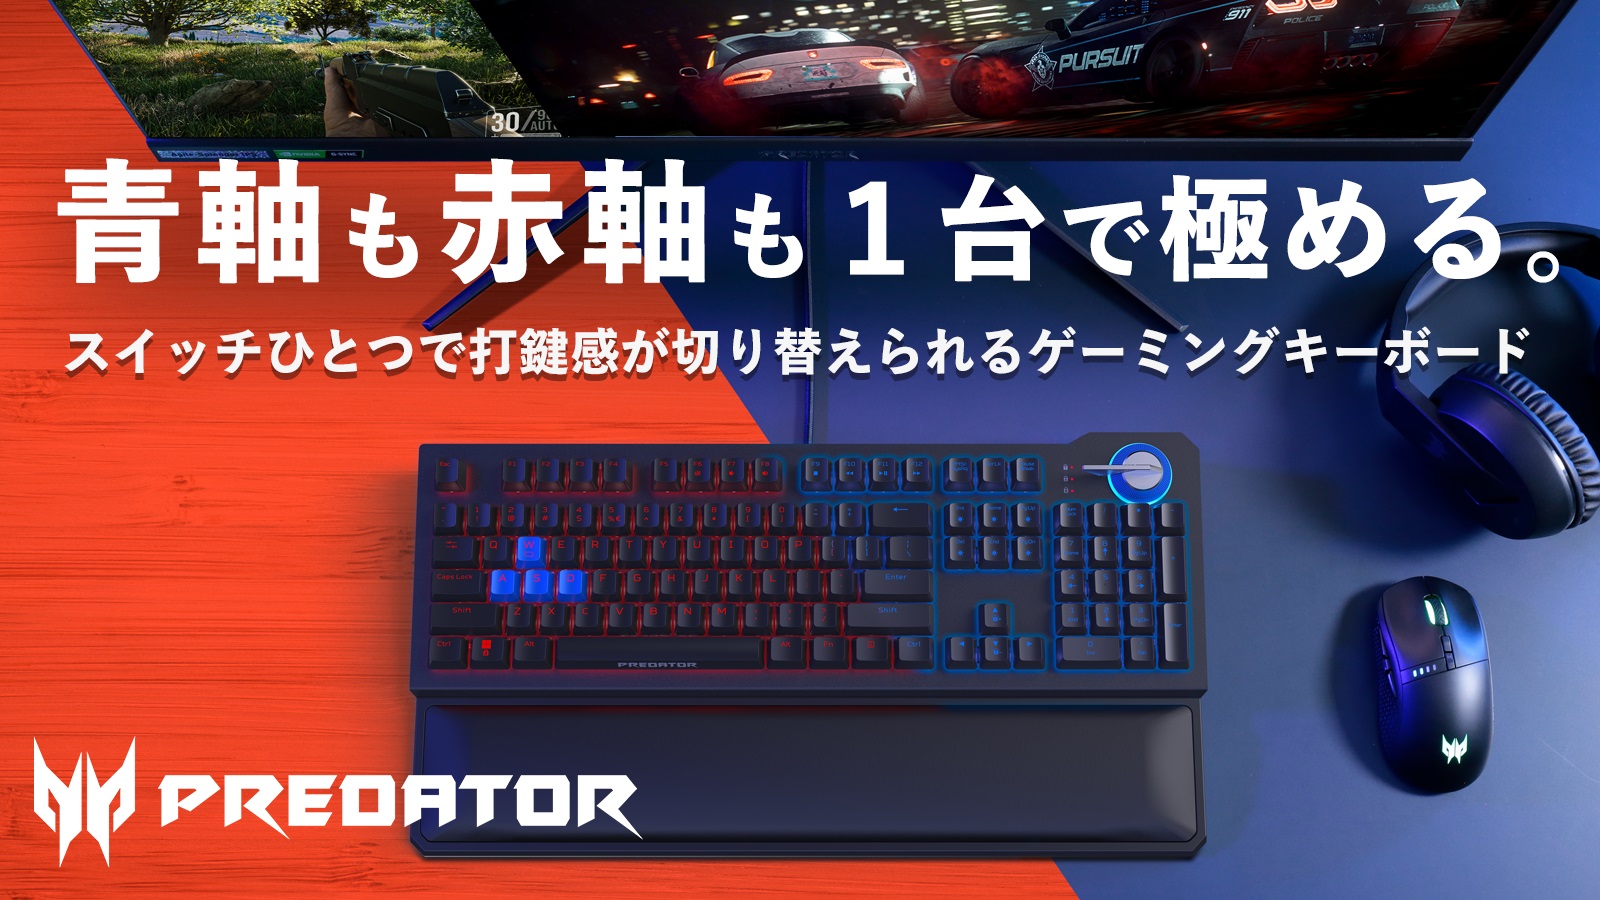 Predatorブランド初 タイピングモードの青軸赤軸切り替え可能なゲーミングキーボード Predator Aethon 700登場 Makuakeにて先行予約販売スタート 日本エイサー株式会社のプレスリリース